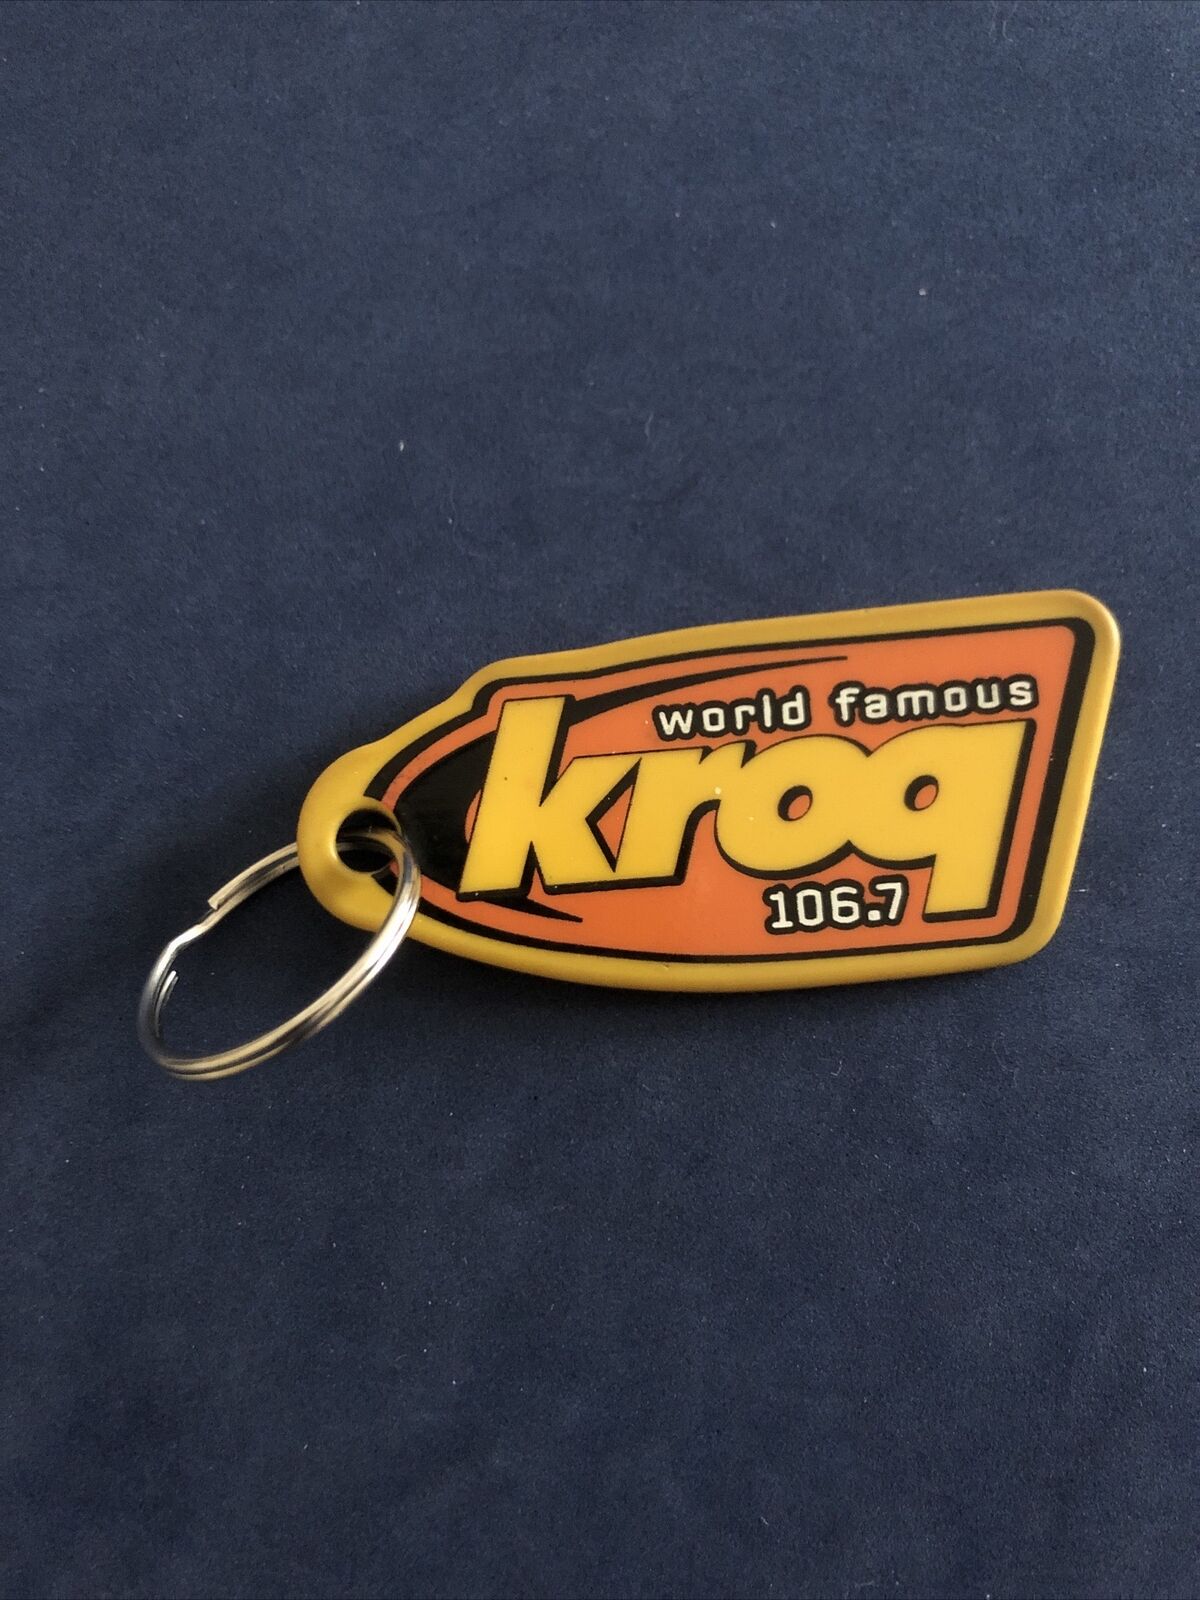 Los Angeles KROQ 106.7 Rock Music FM Radio Station California Vintage Key Chain